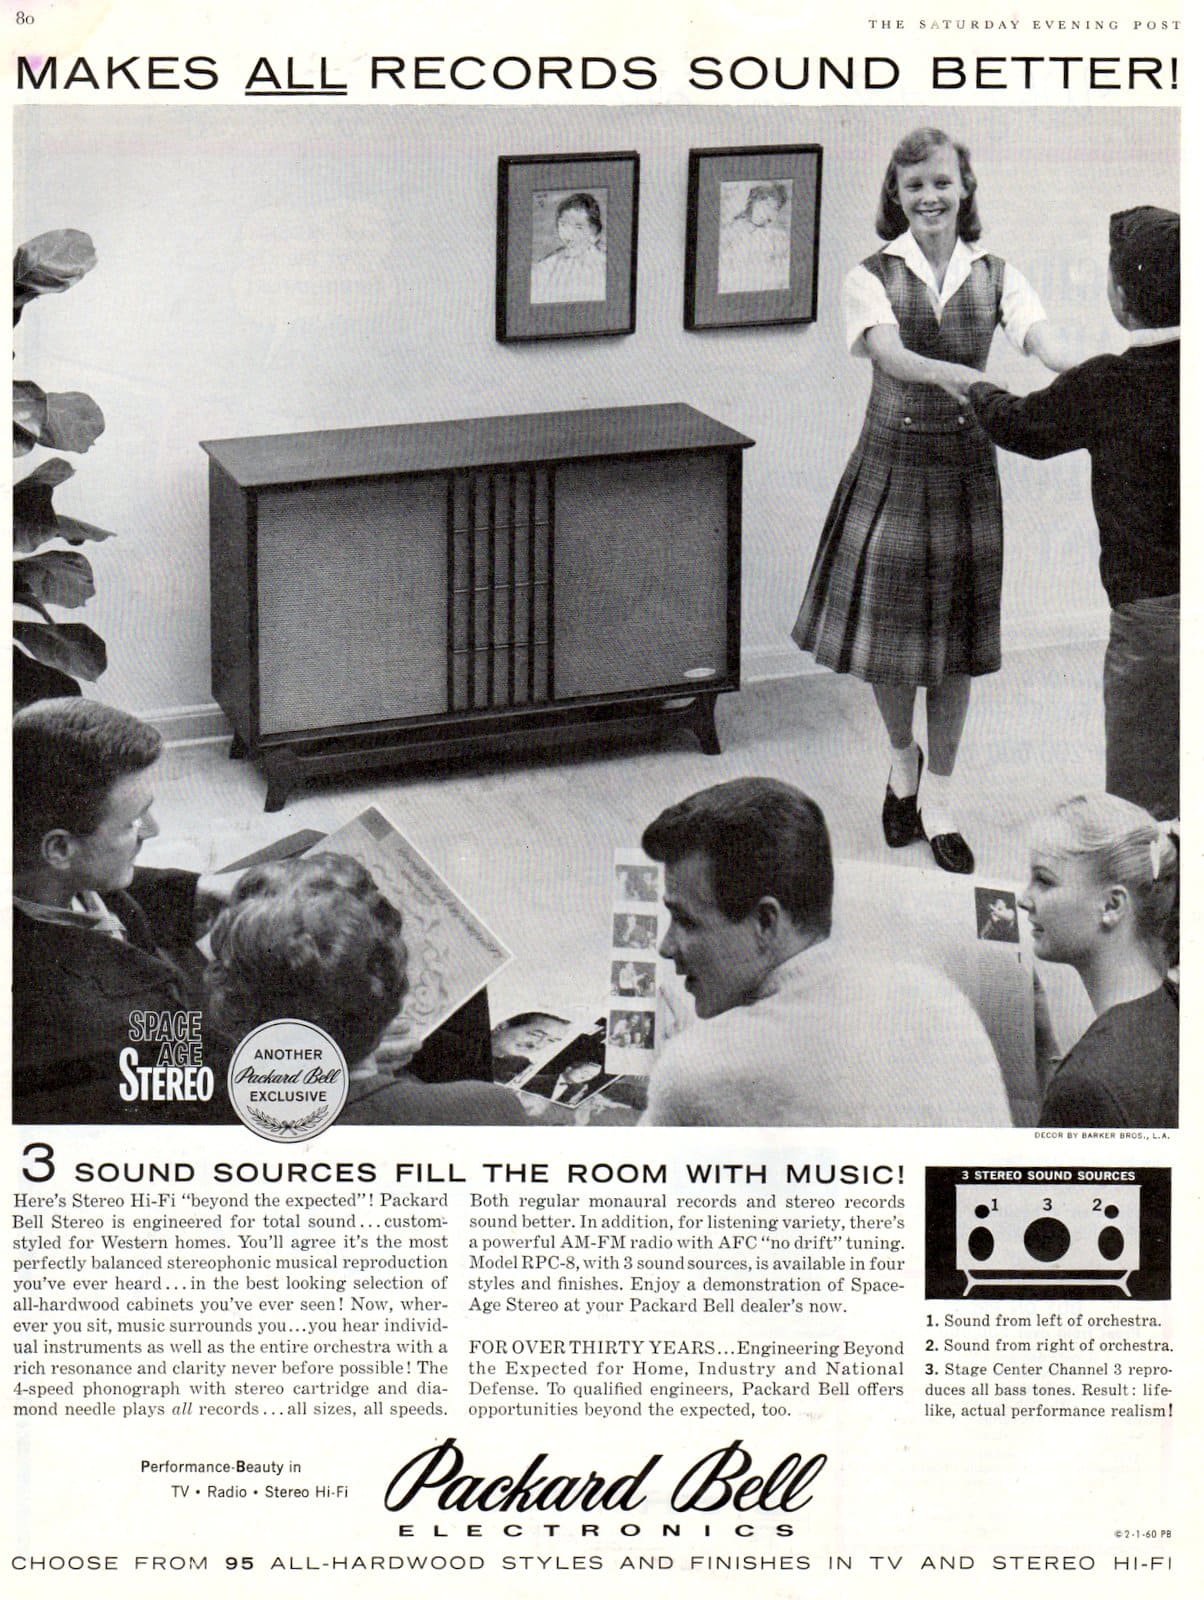 Old-Packard-Bell-stereo-cabinet-1960.jpg